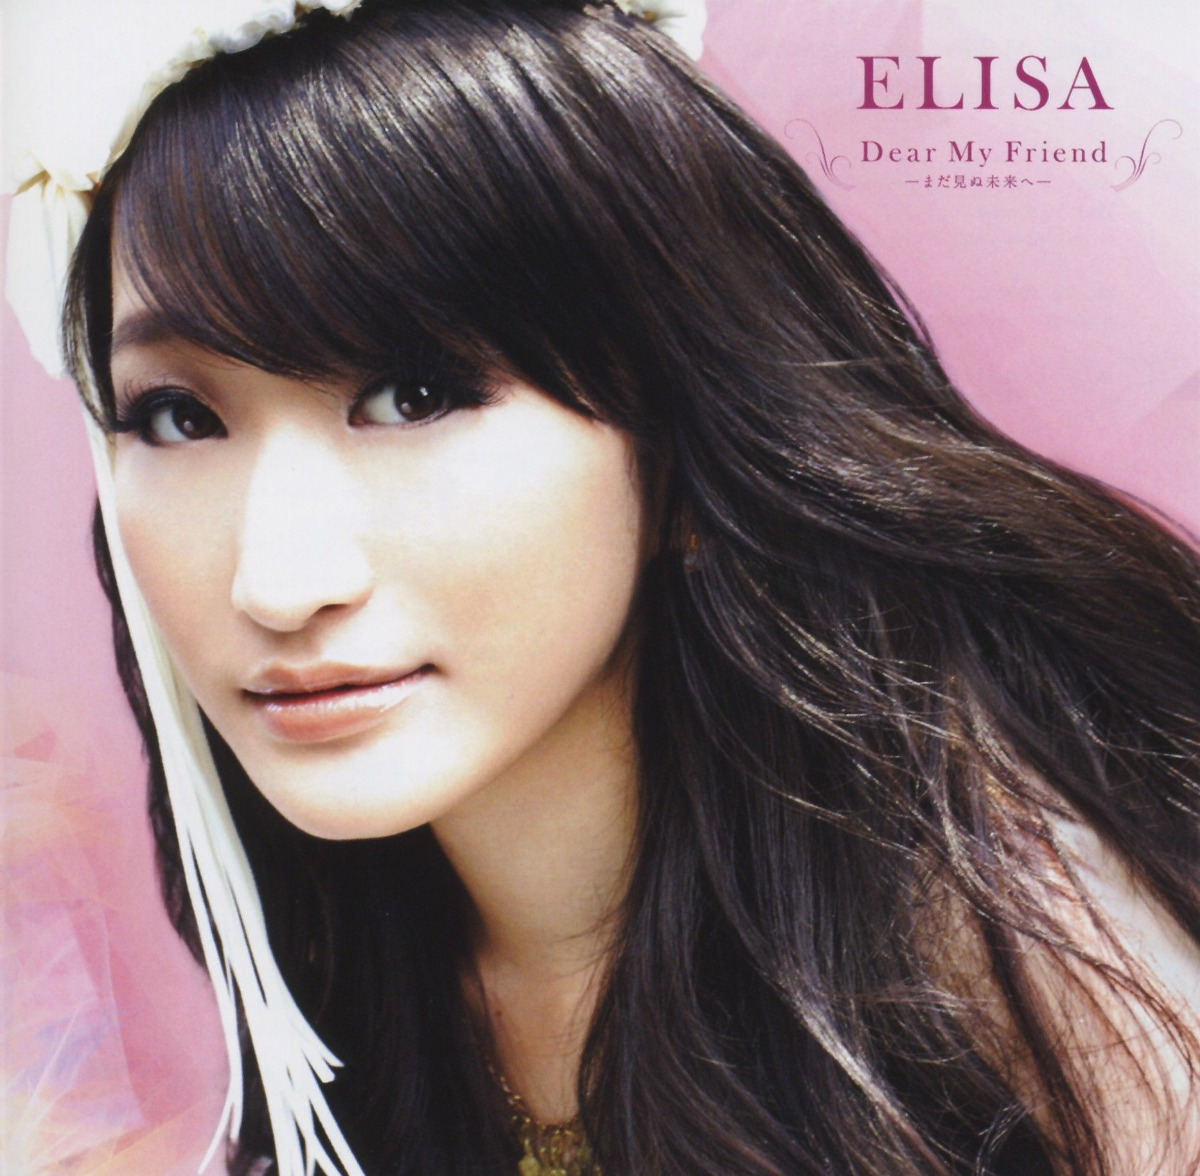 Cover art for『ELISA - Dear My Friend −まだ見ぬ未来へ−』from the release『Dear My Friend -Mada Minu Mirai e-